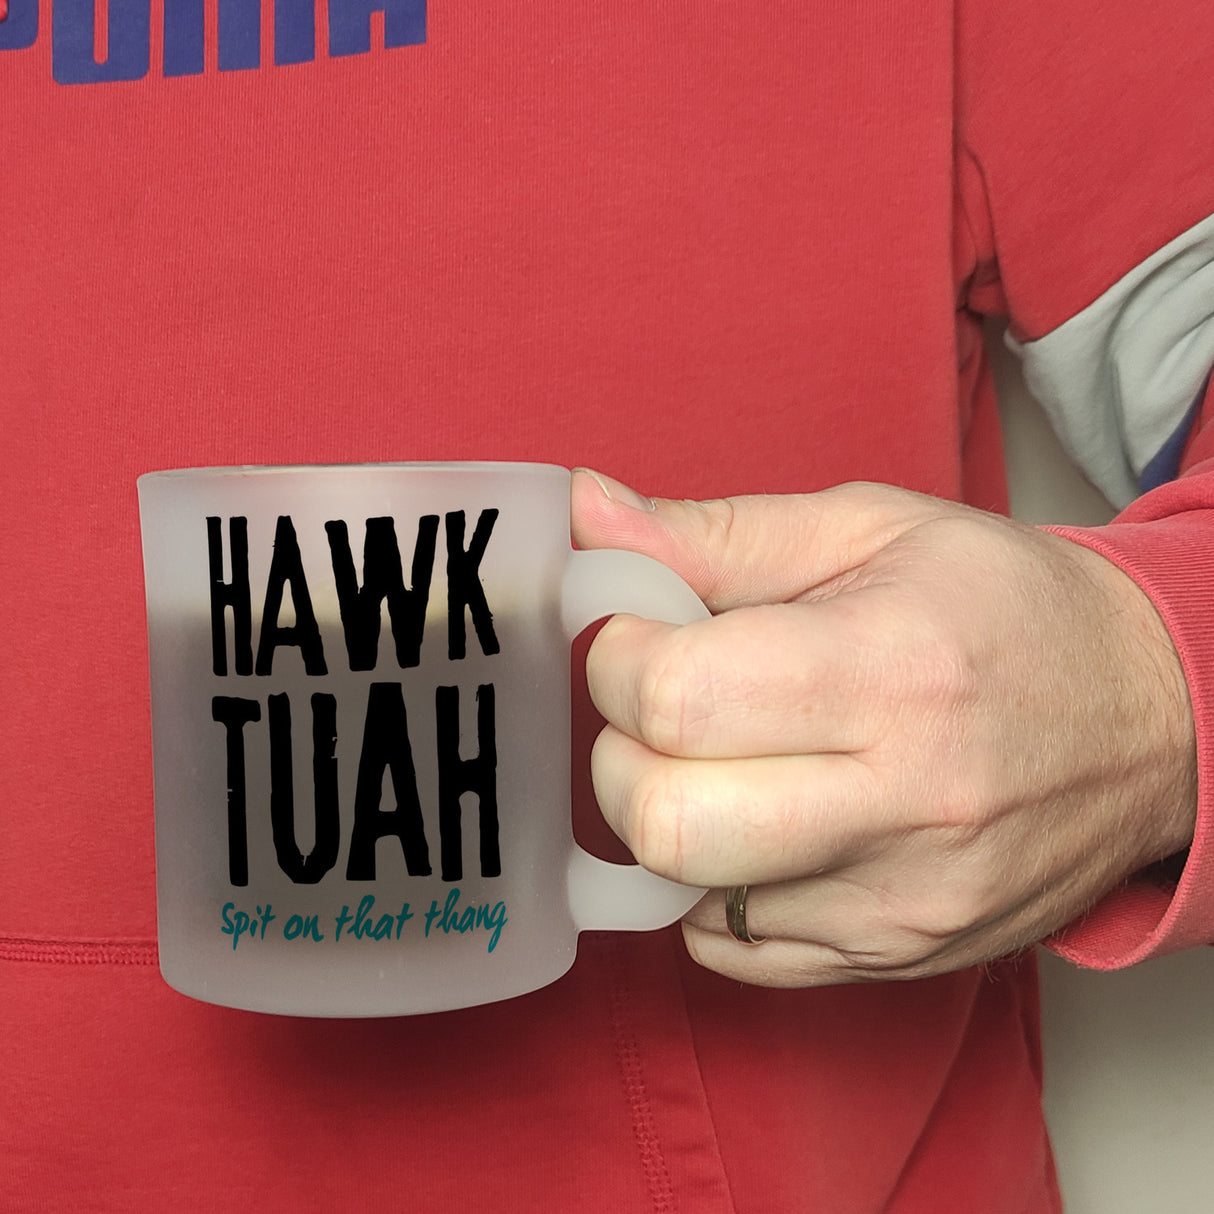 Hawk Tuah Kaffeebecher mit Spruch Spit on that thang